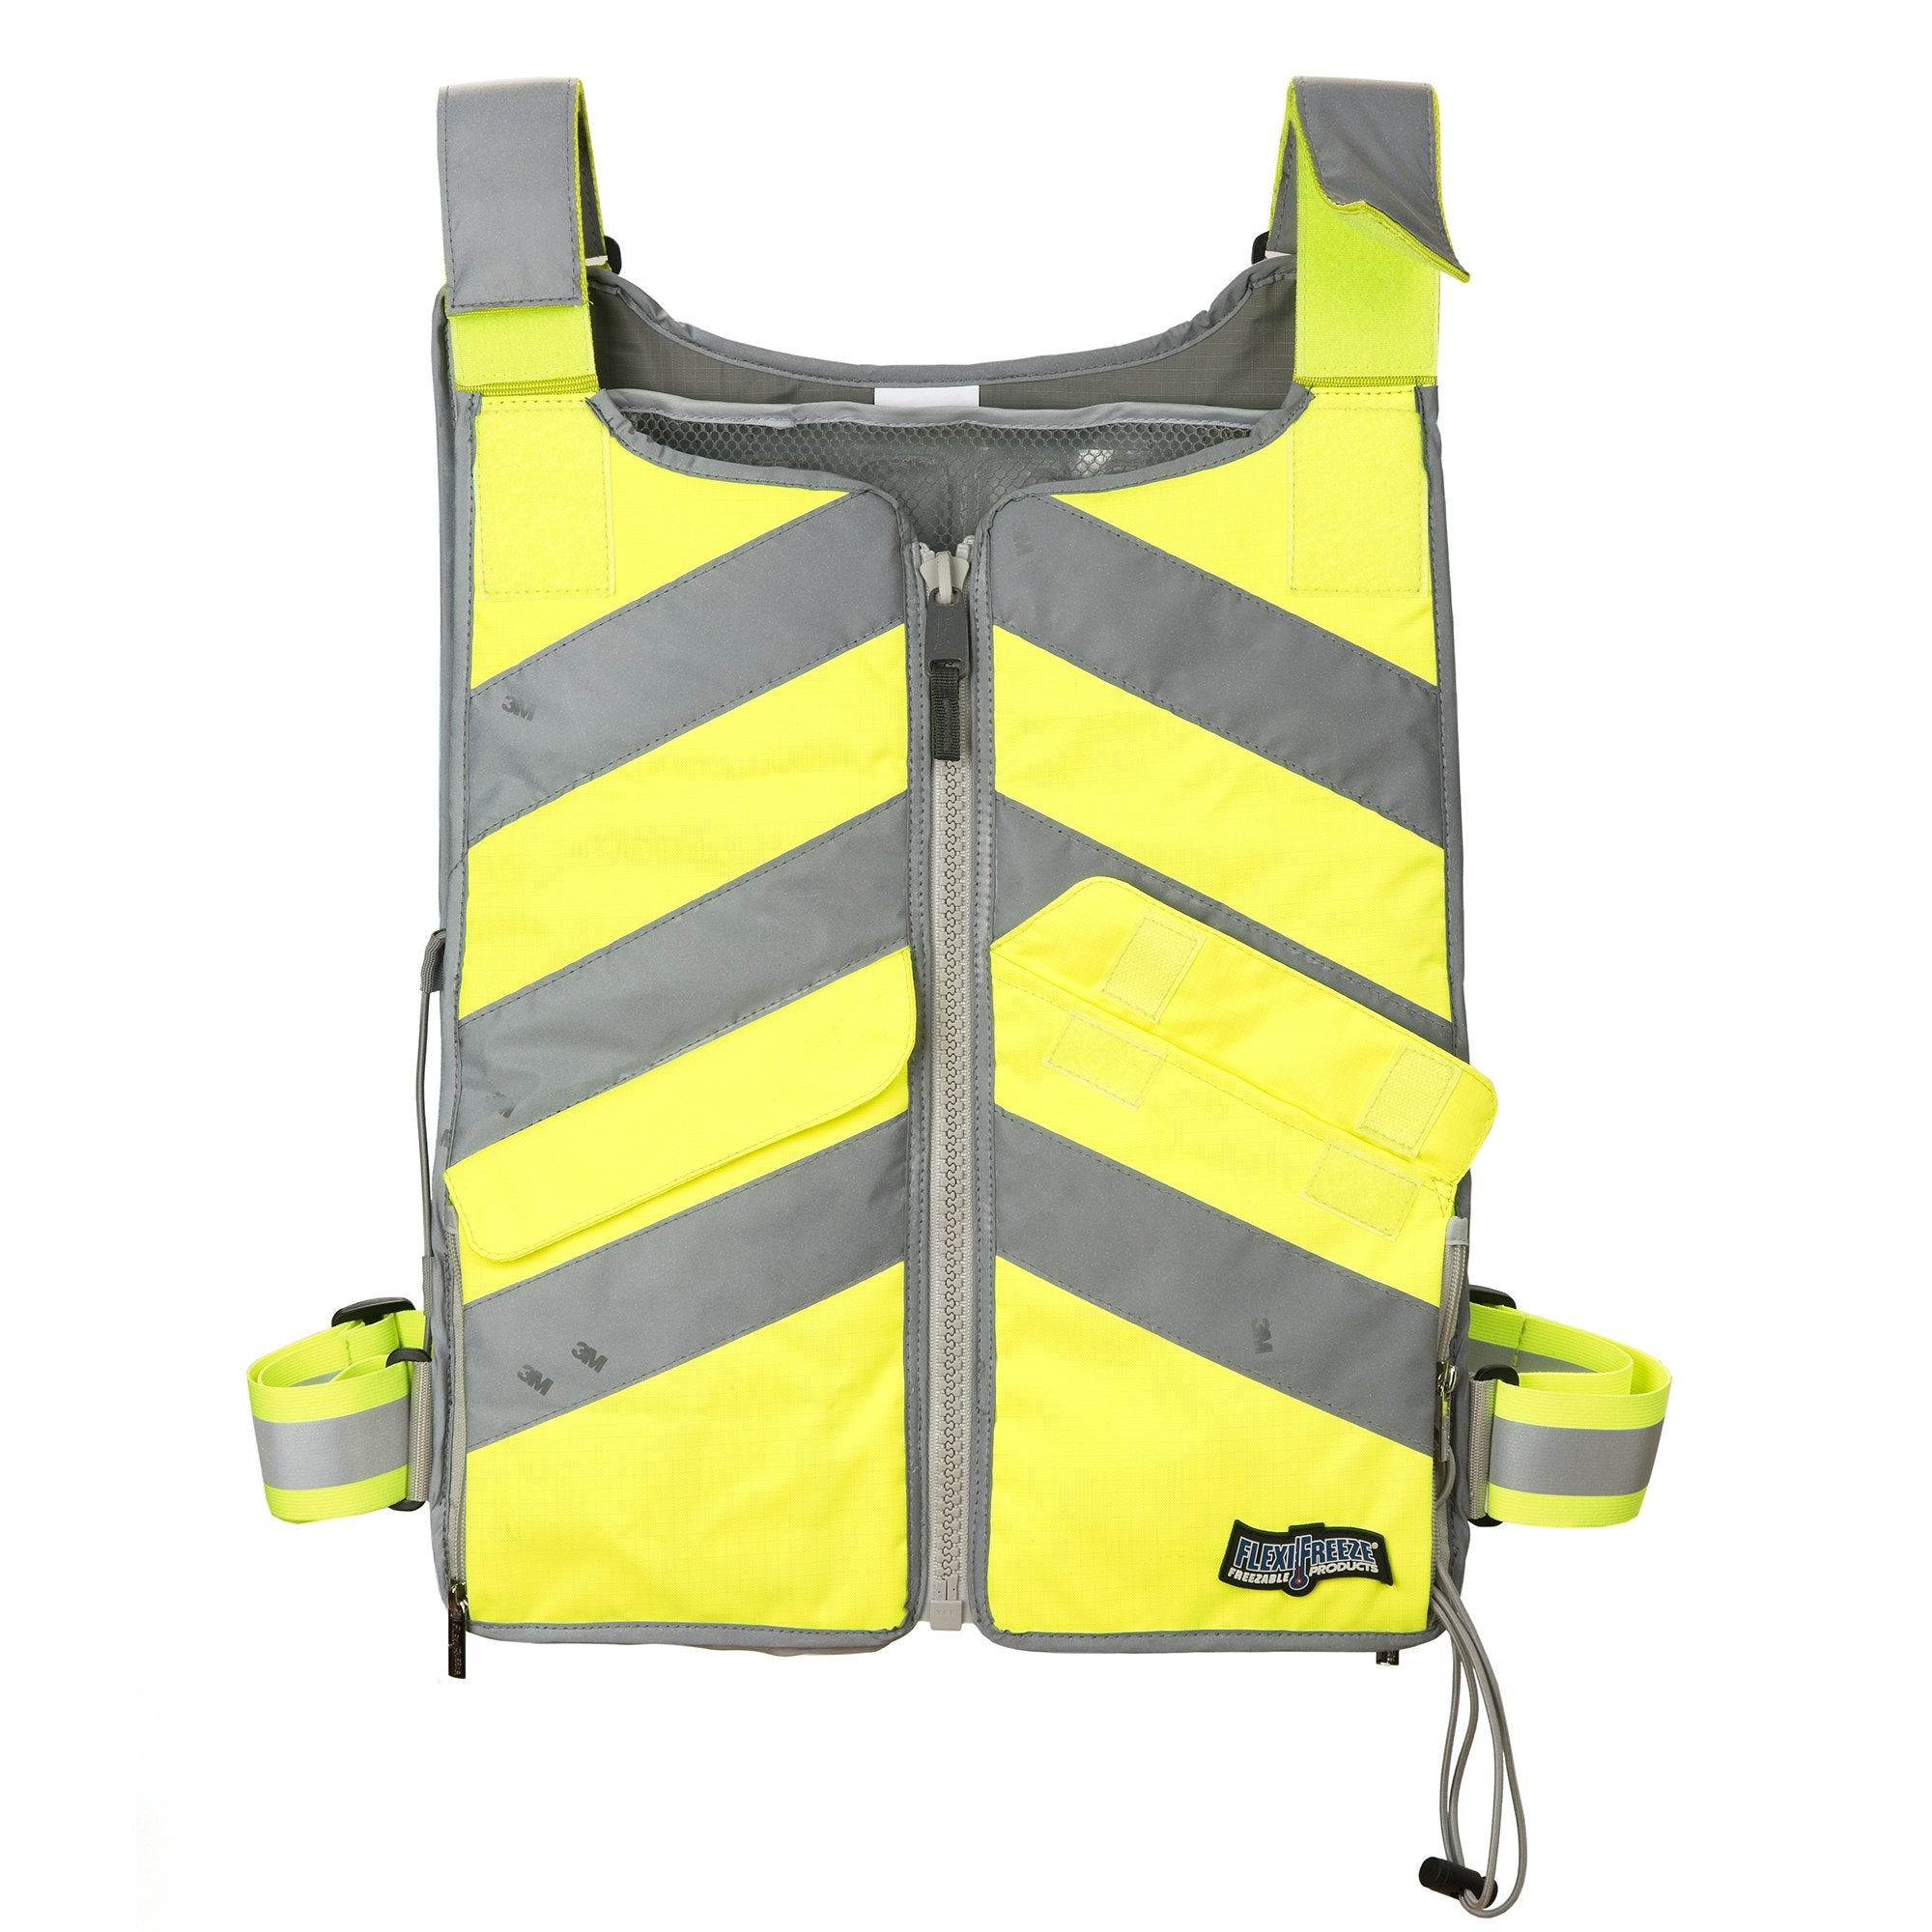 Man wearing FlexiFreeze Professional Series Ice Vest - Hi-Vis, yellow, front view